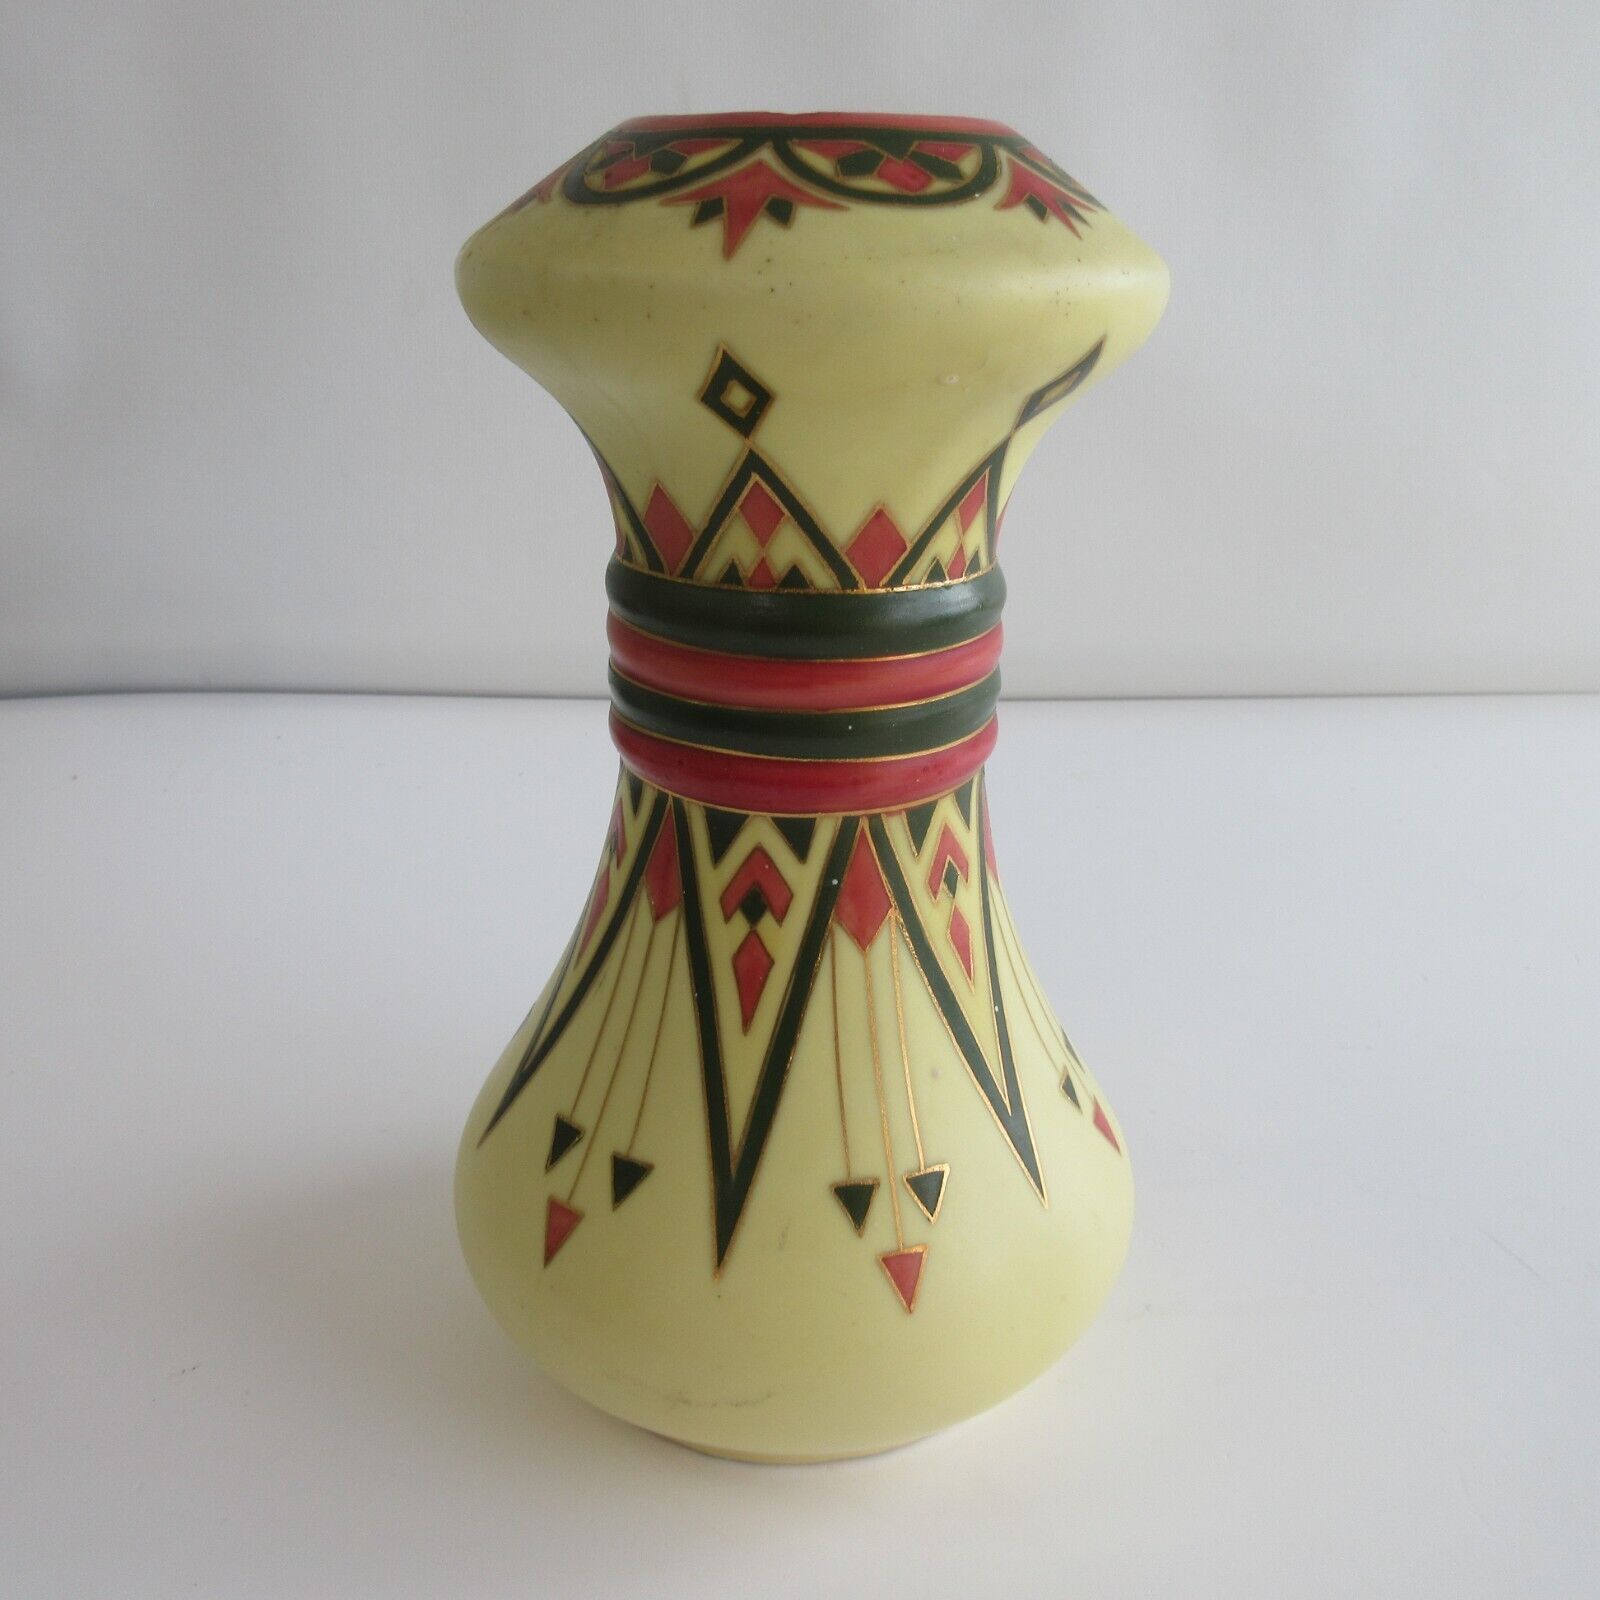 VAS Fennia Arabia Finland early 20th century Art Nouveau vase